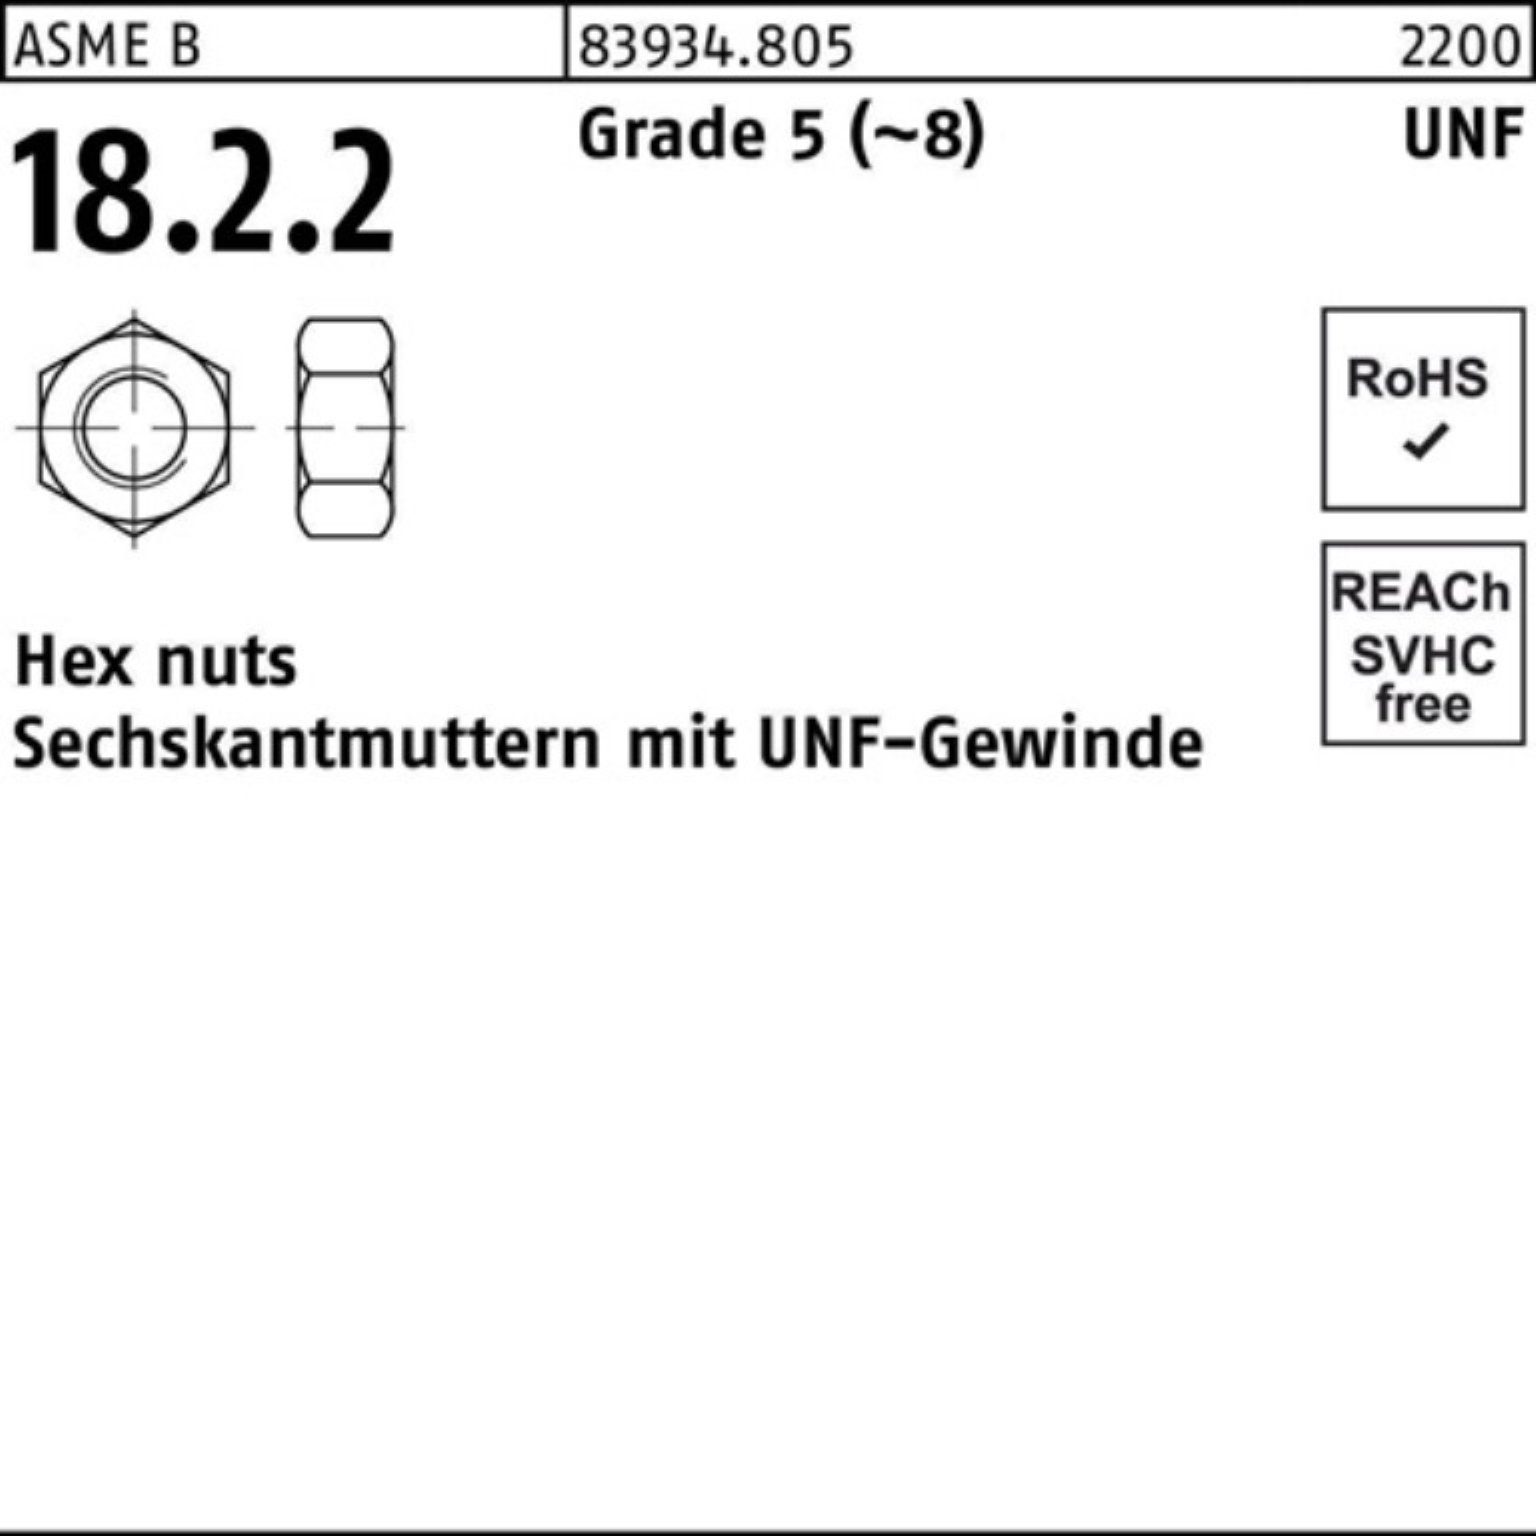 Reyher Muttern 100er UNF-Gewinde Grade 5 (8) S Pack 83934 7/16 100 R Sechskantmutter